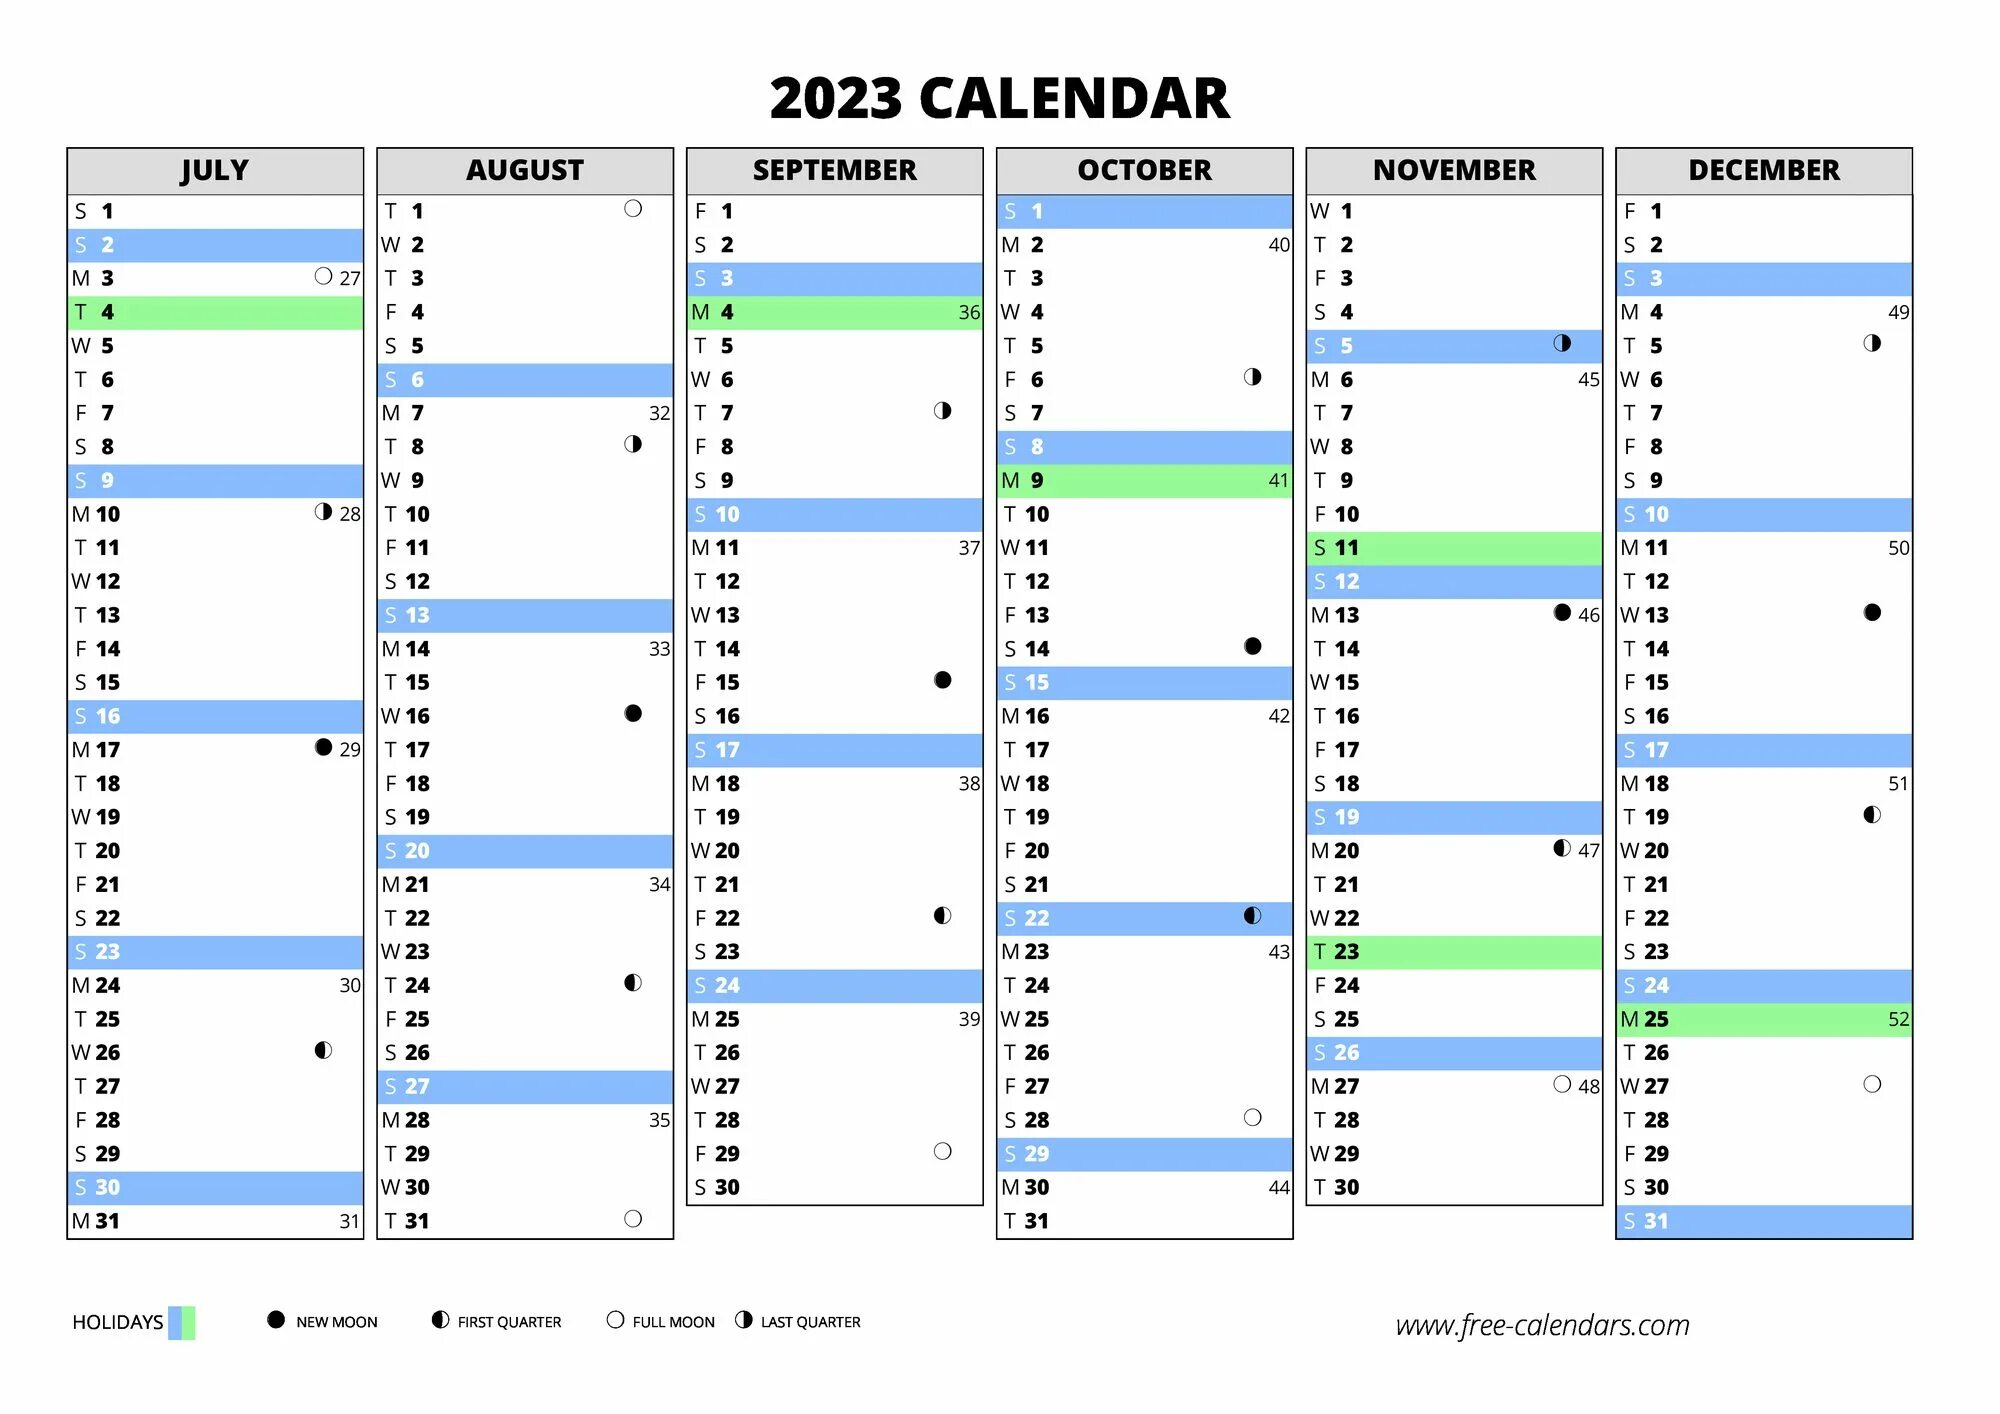 Calendar 2000. Календарь 2000-2023. Календарь 1972. Календарь 1972 сентябрь.